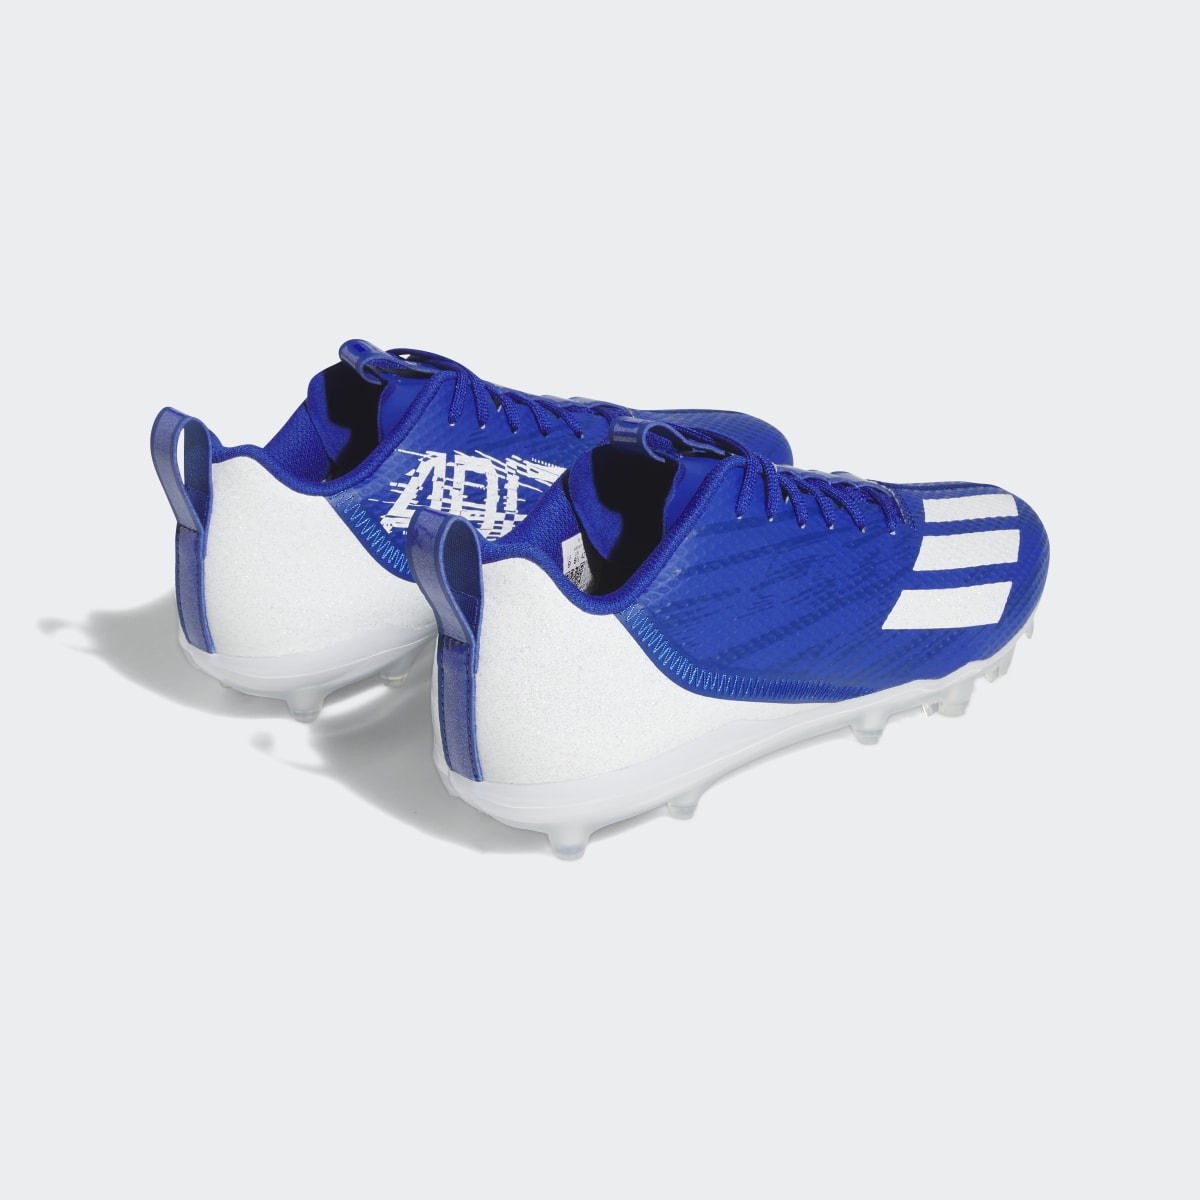 Adidas adizero Spark Cleats. 6